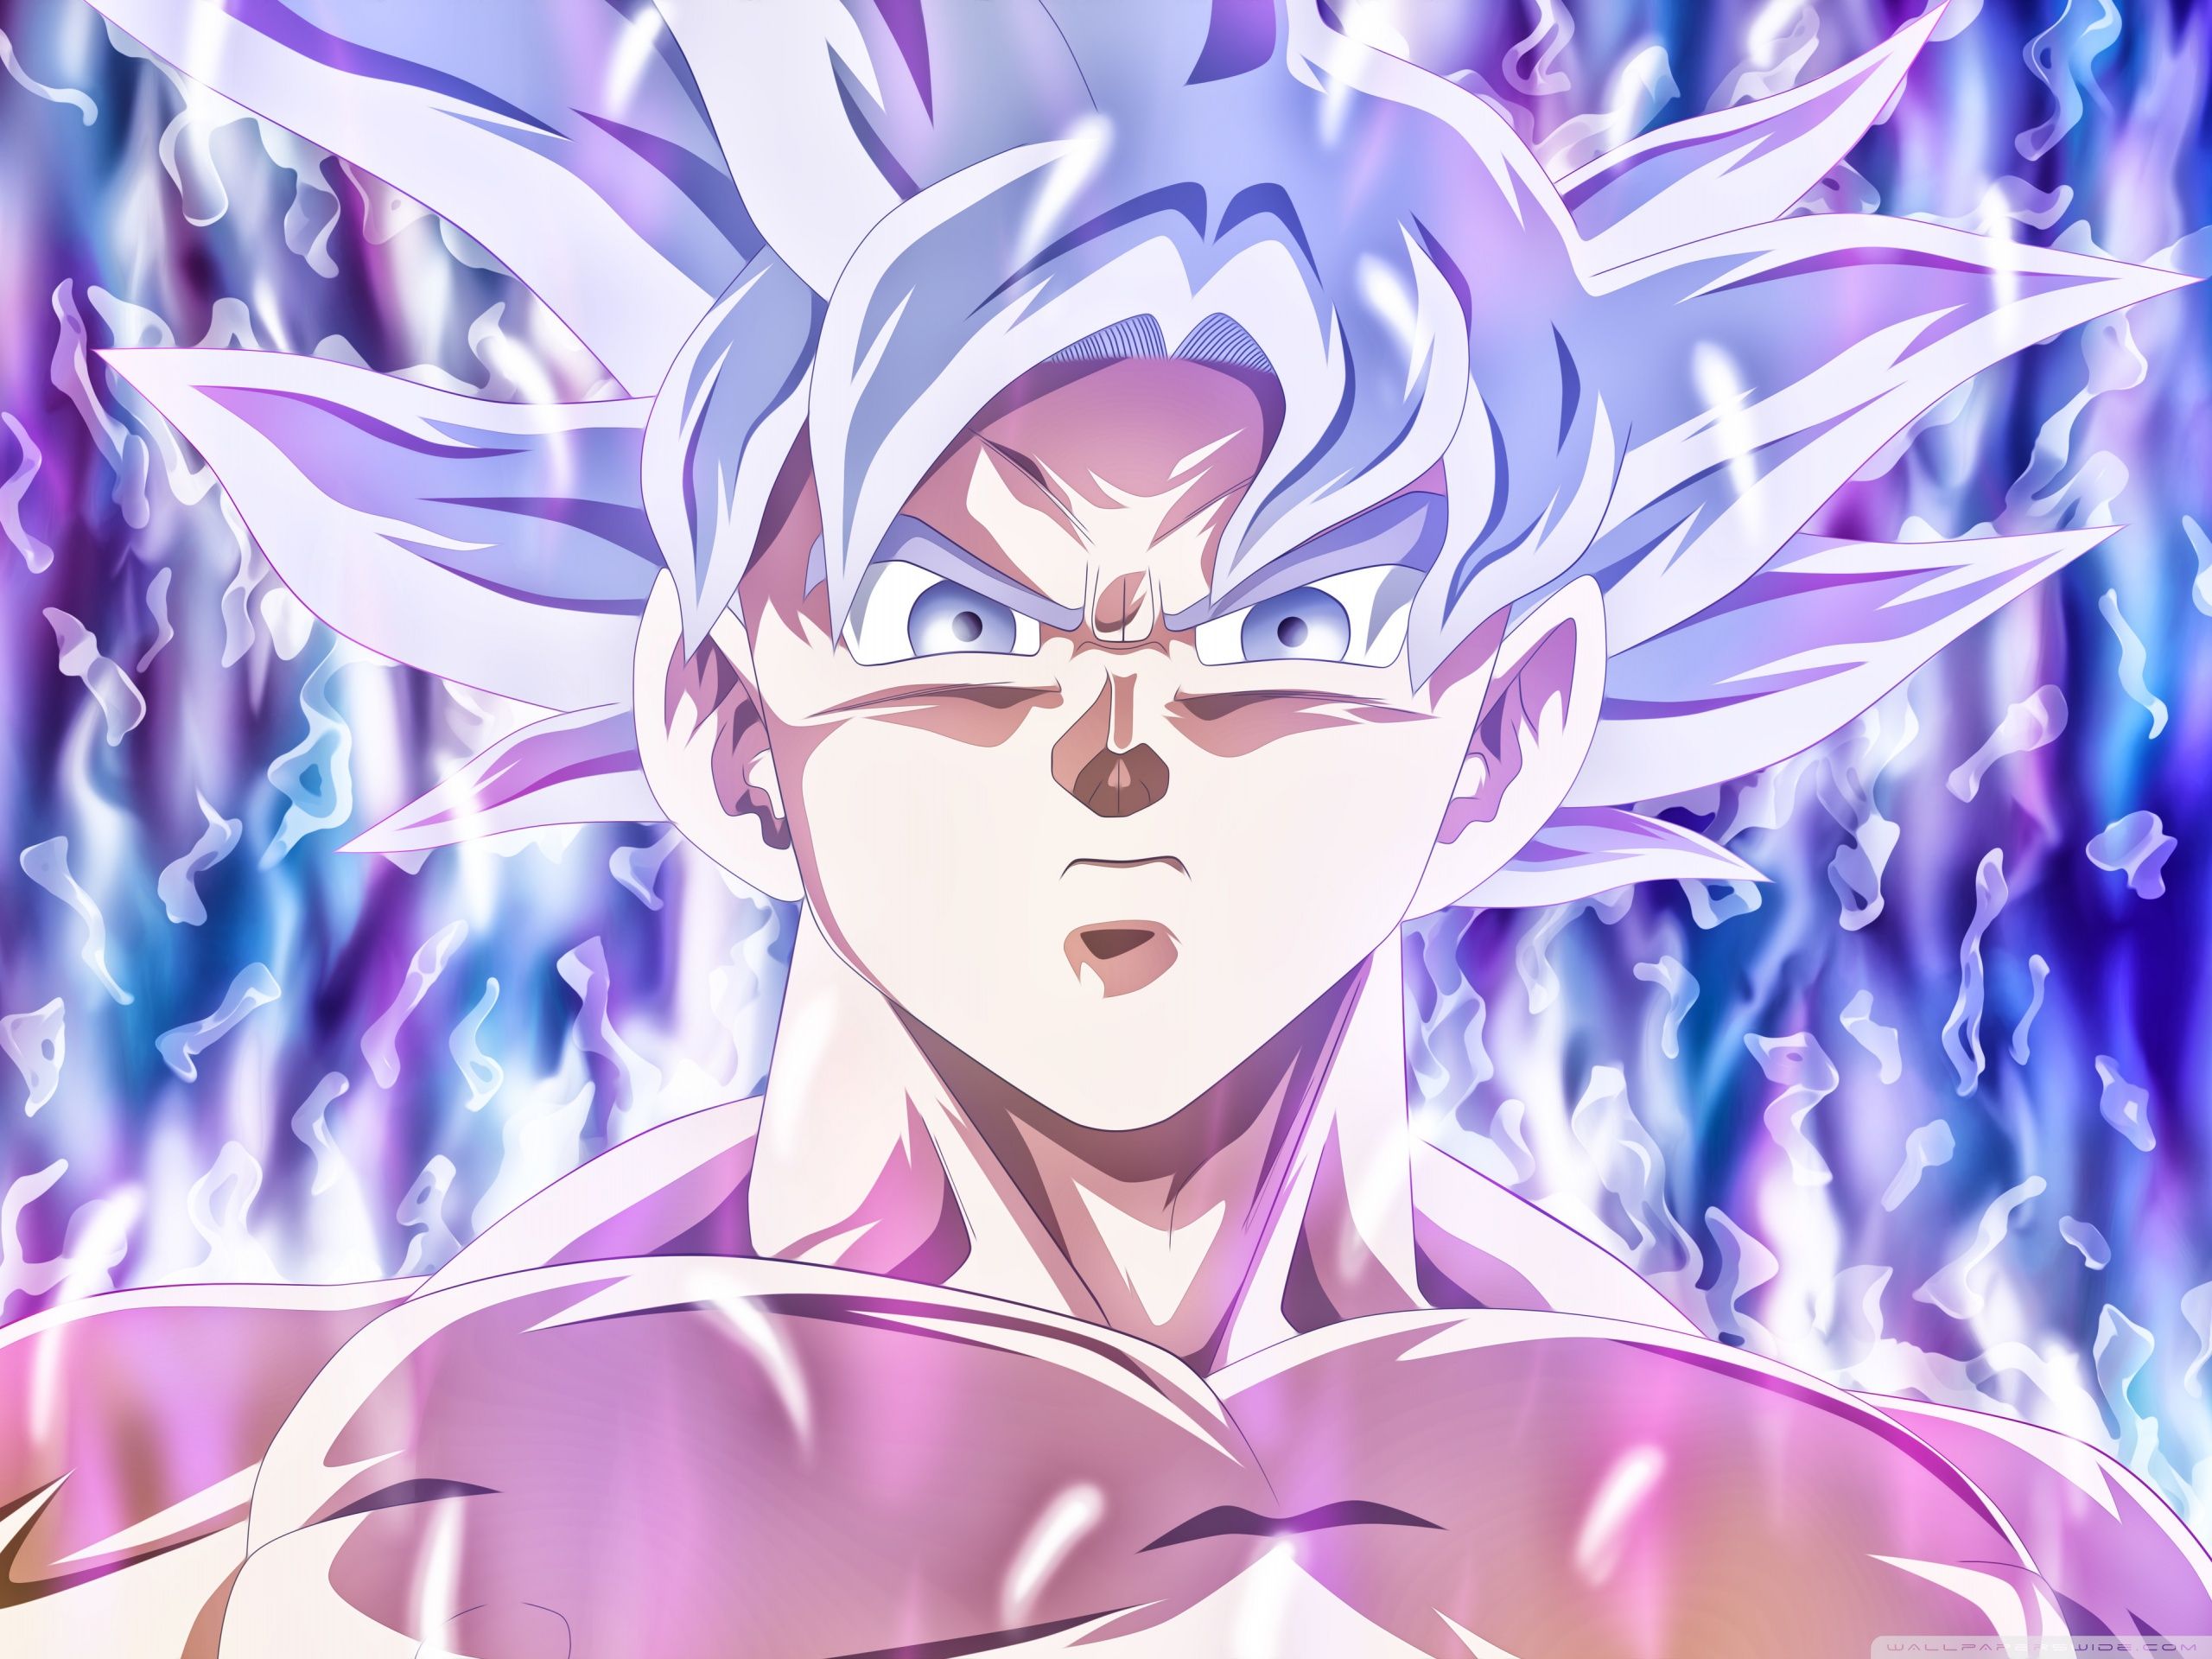 Goku master ultra instinct | Goku | Dragon Ball Z by twist-art on DeviantArt